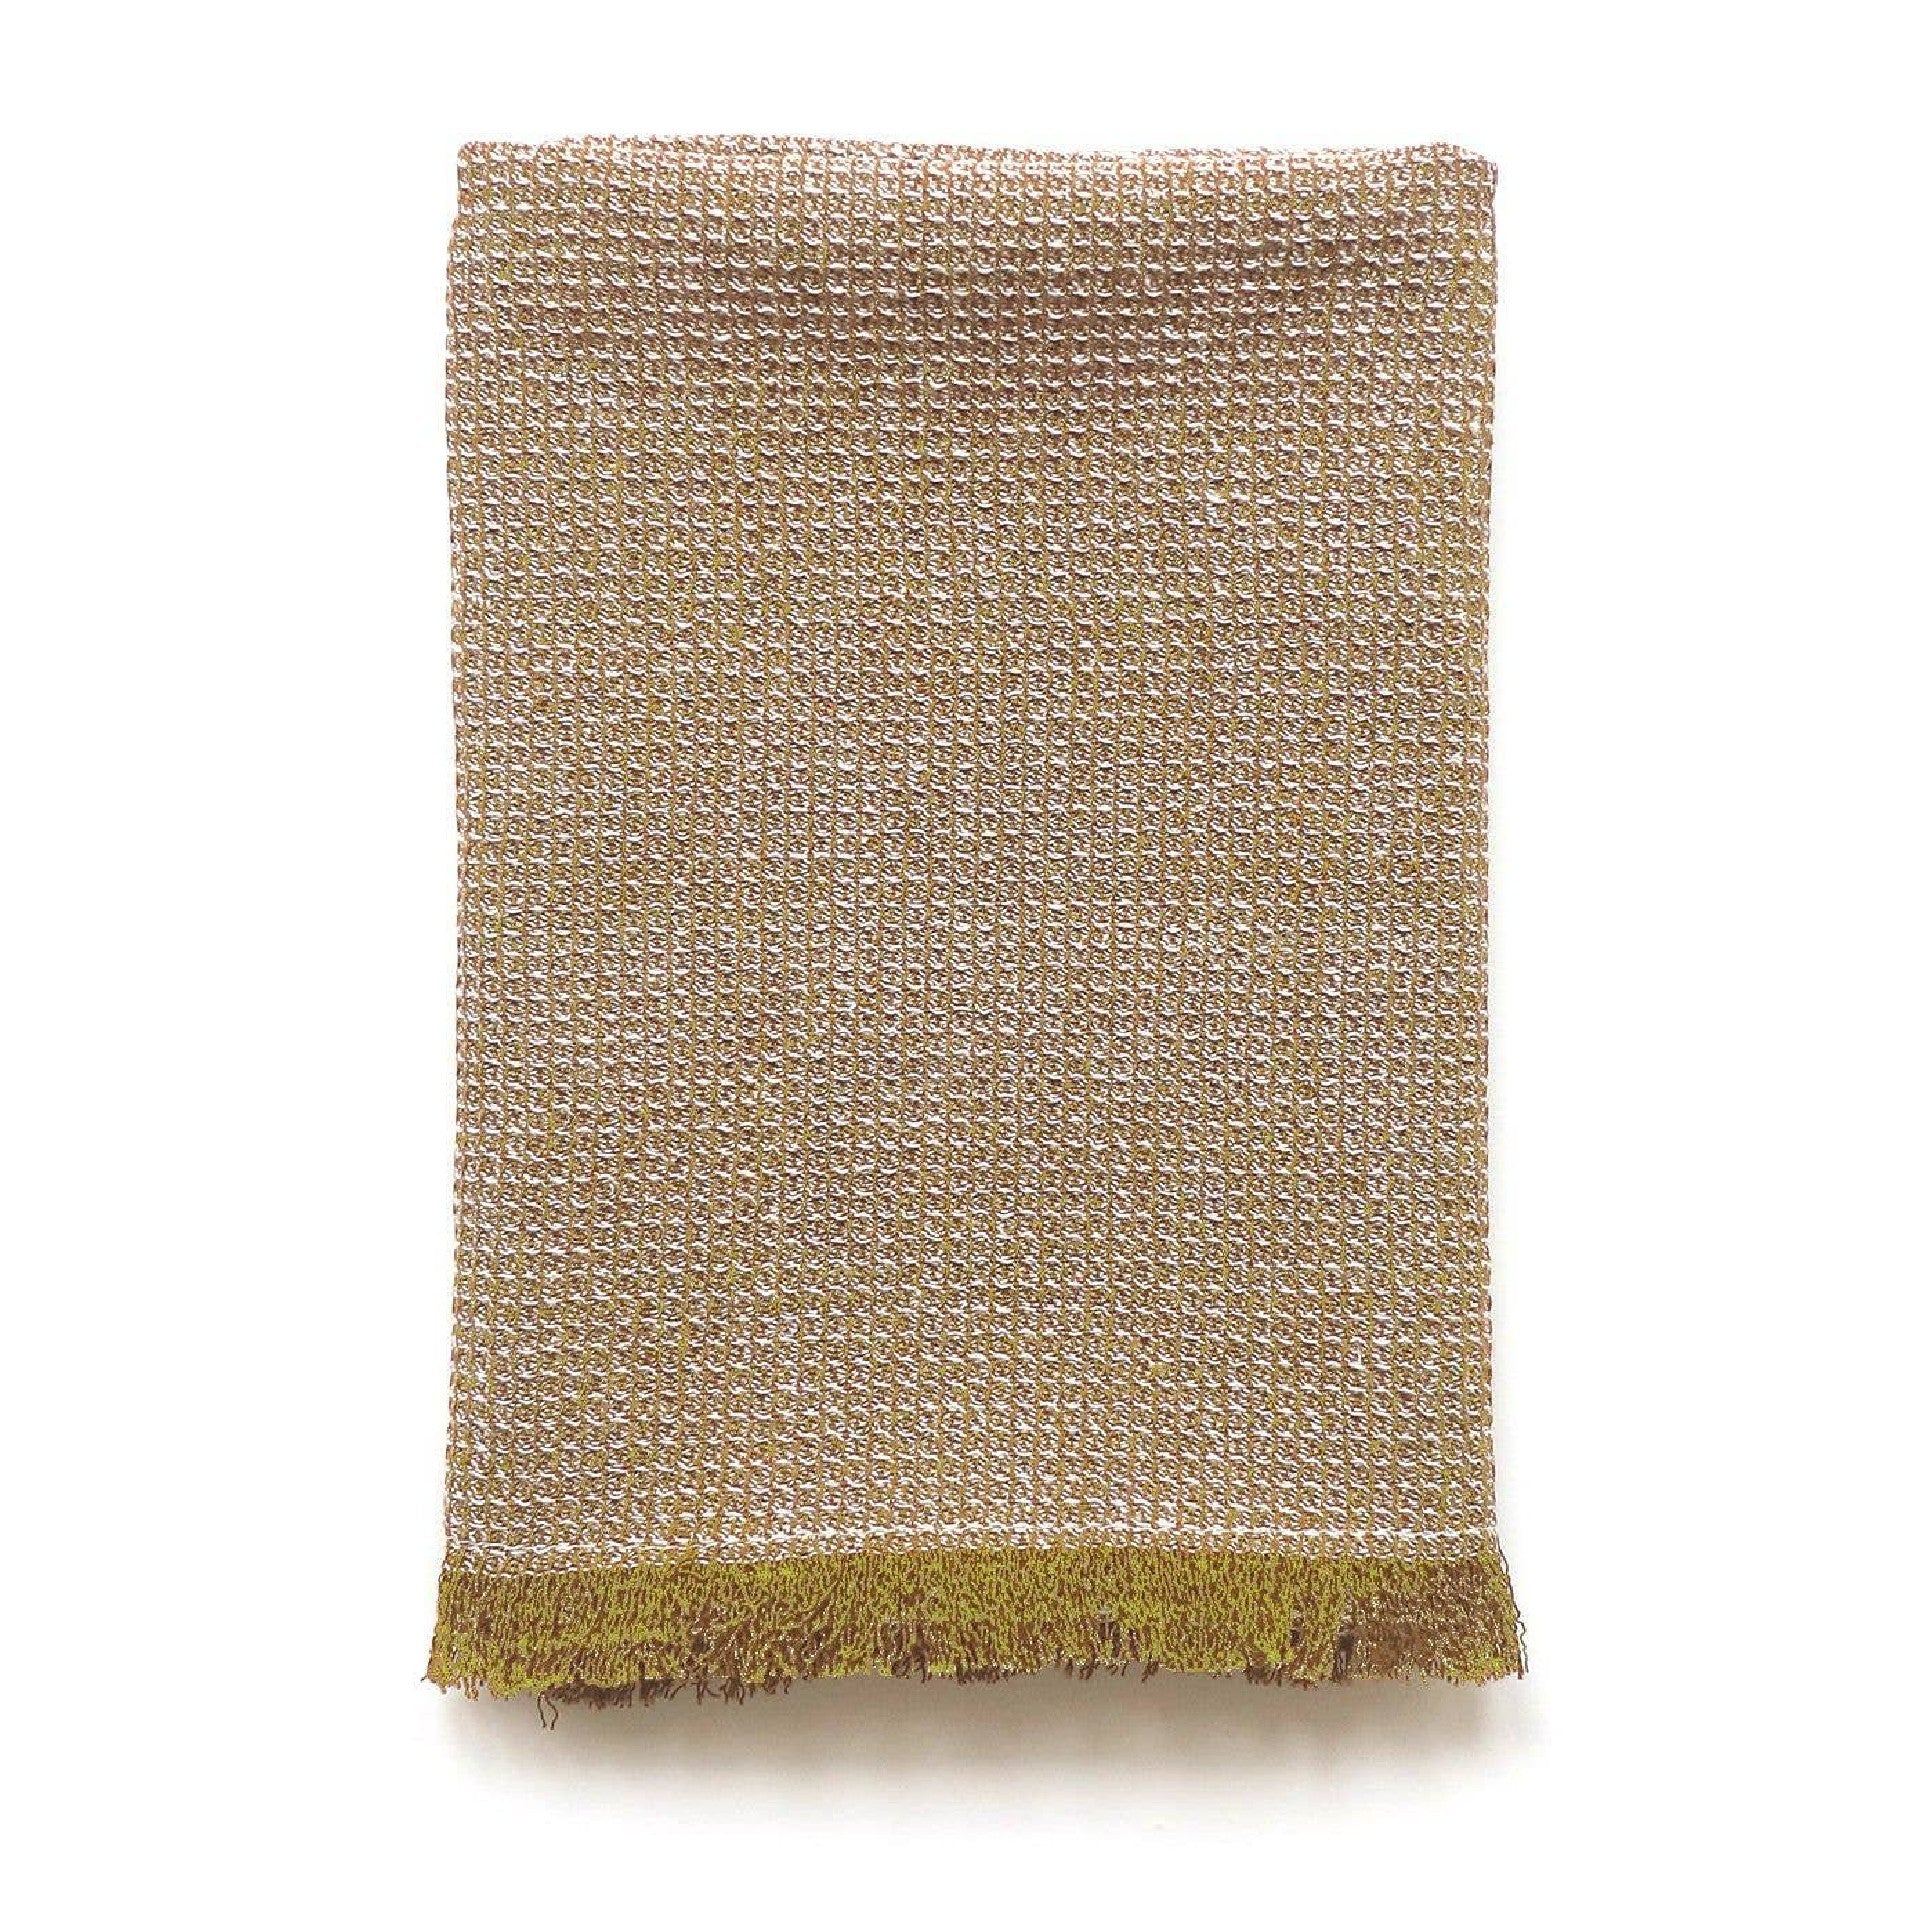 Tea Towel: Mustard with Fringe